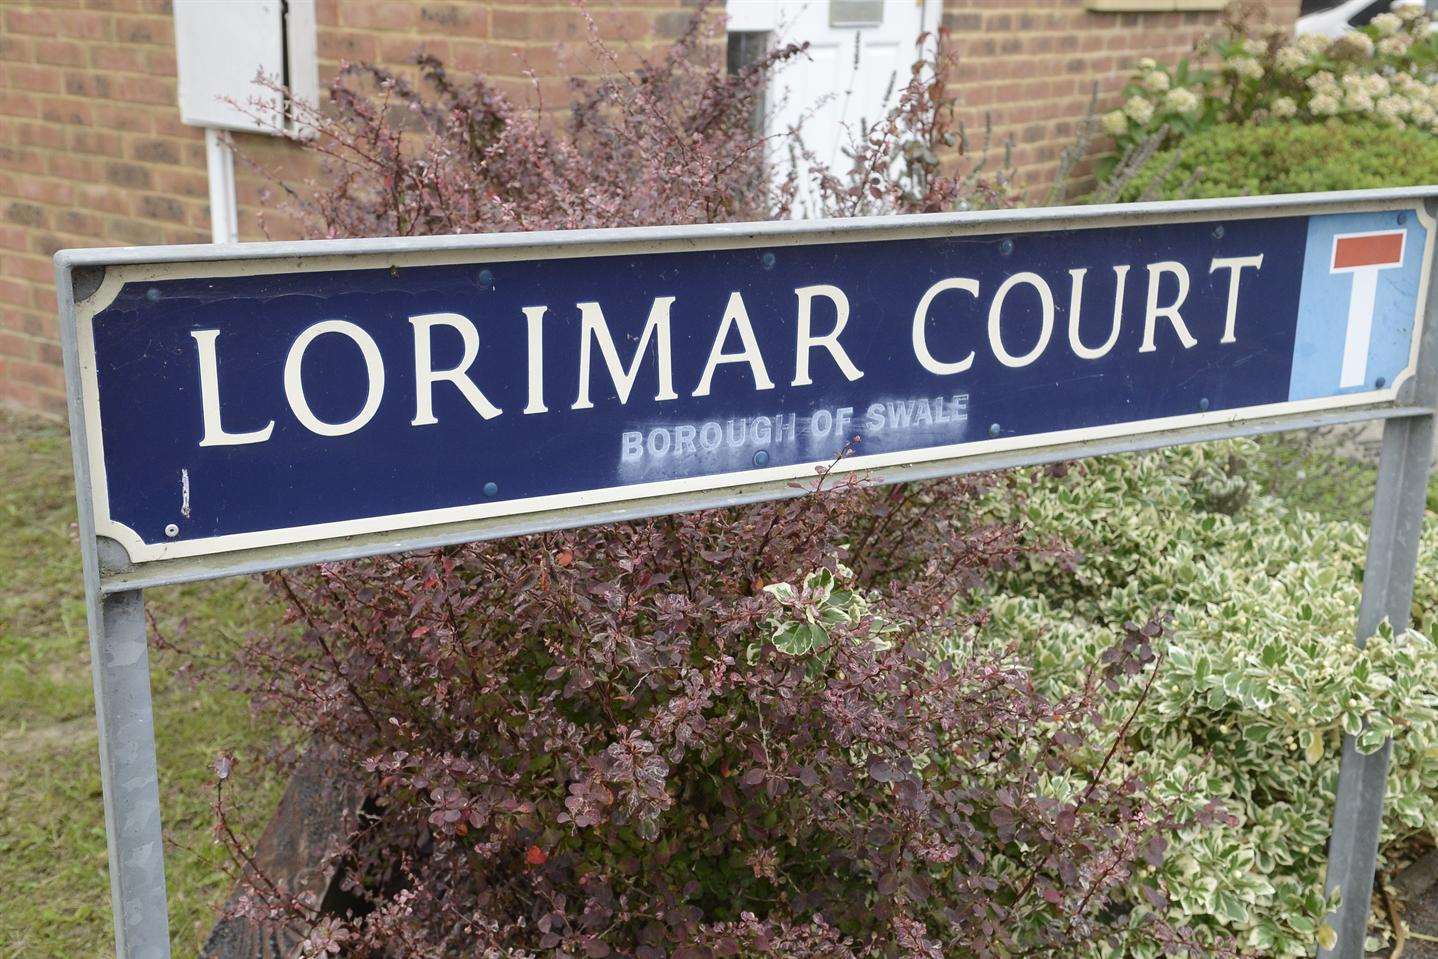 The Lorimar Court road sign